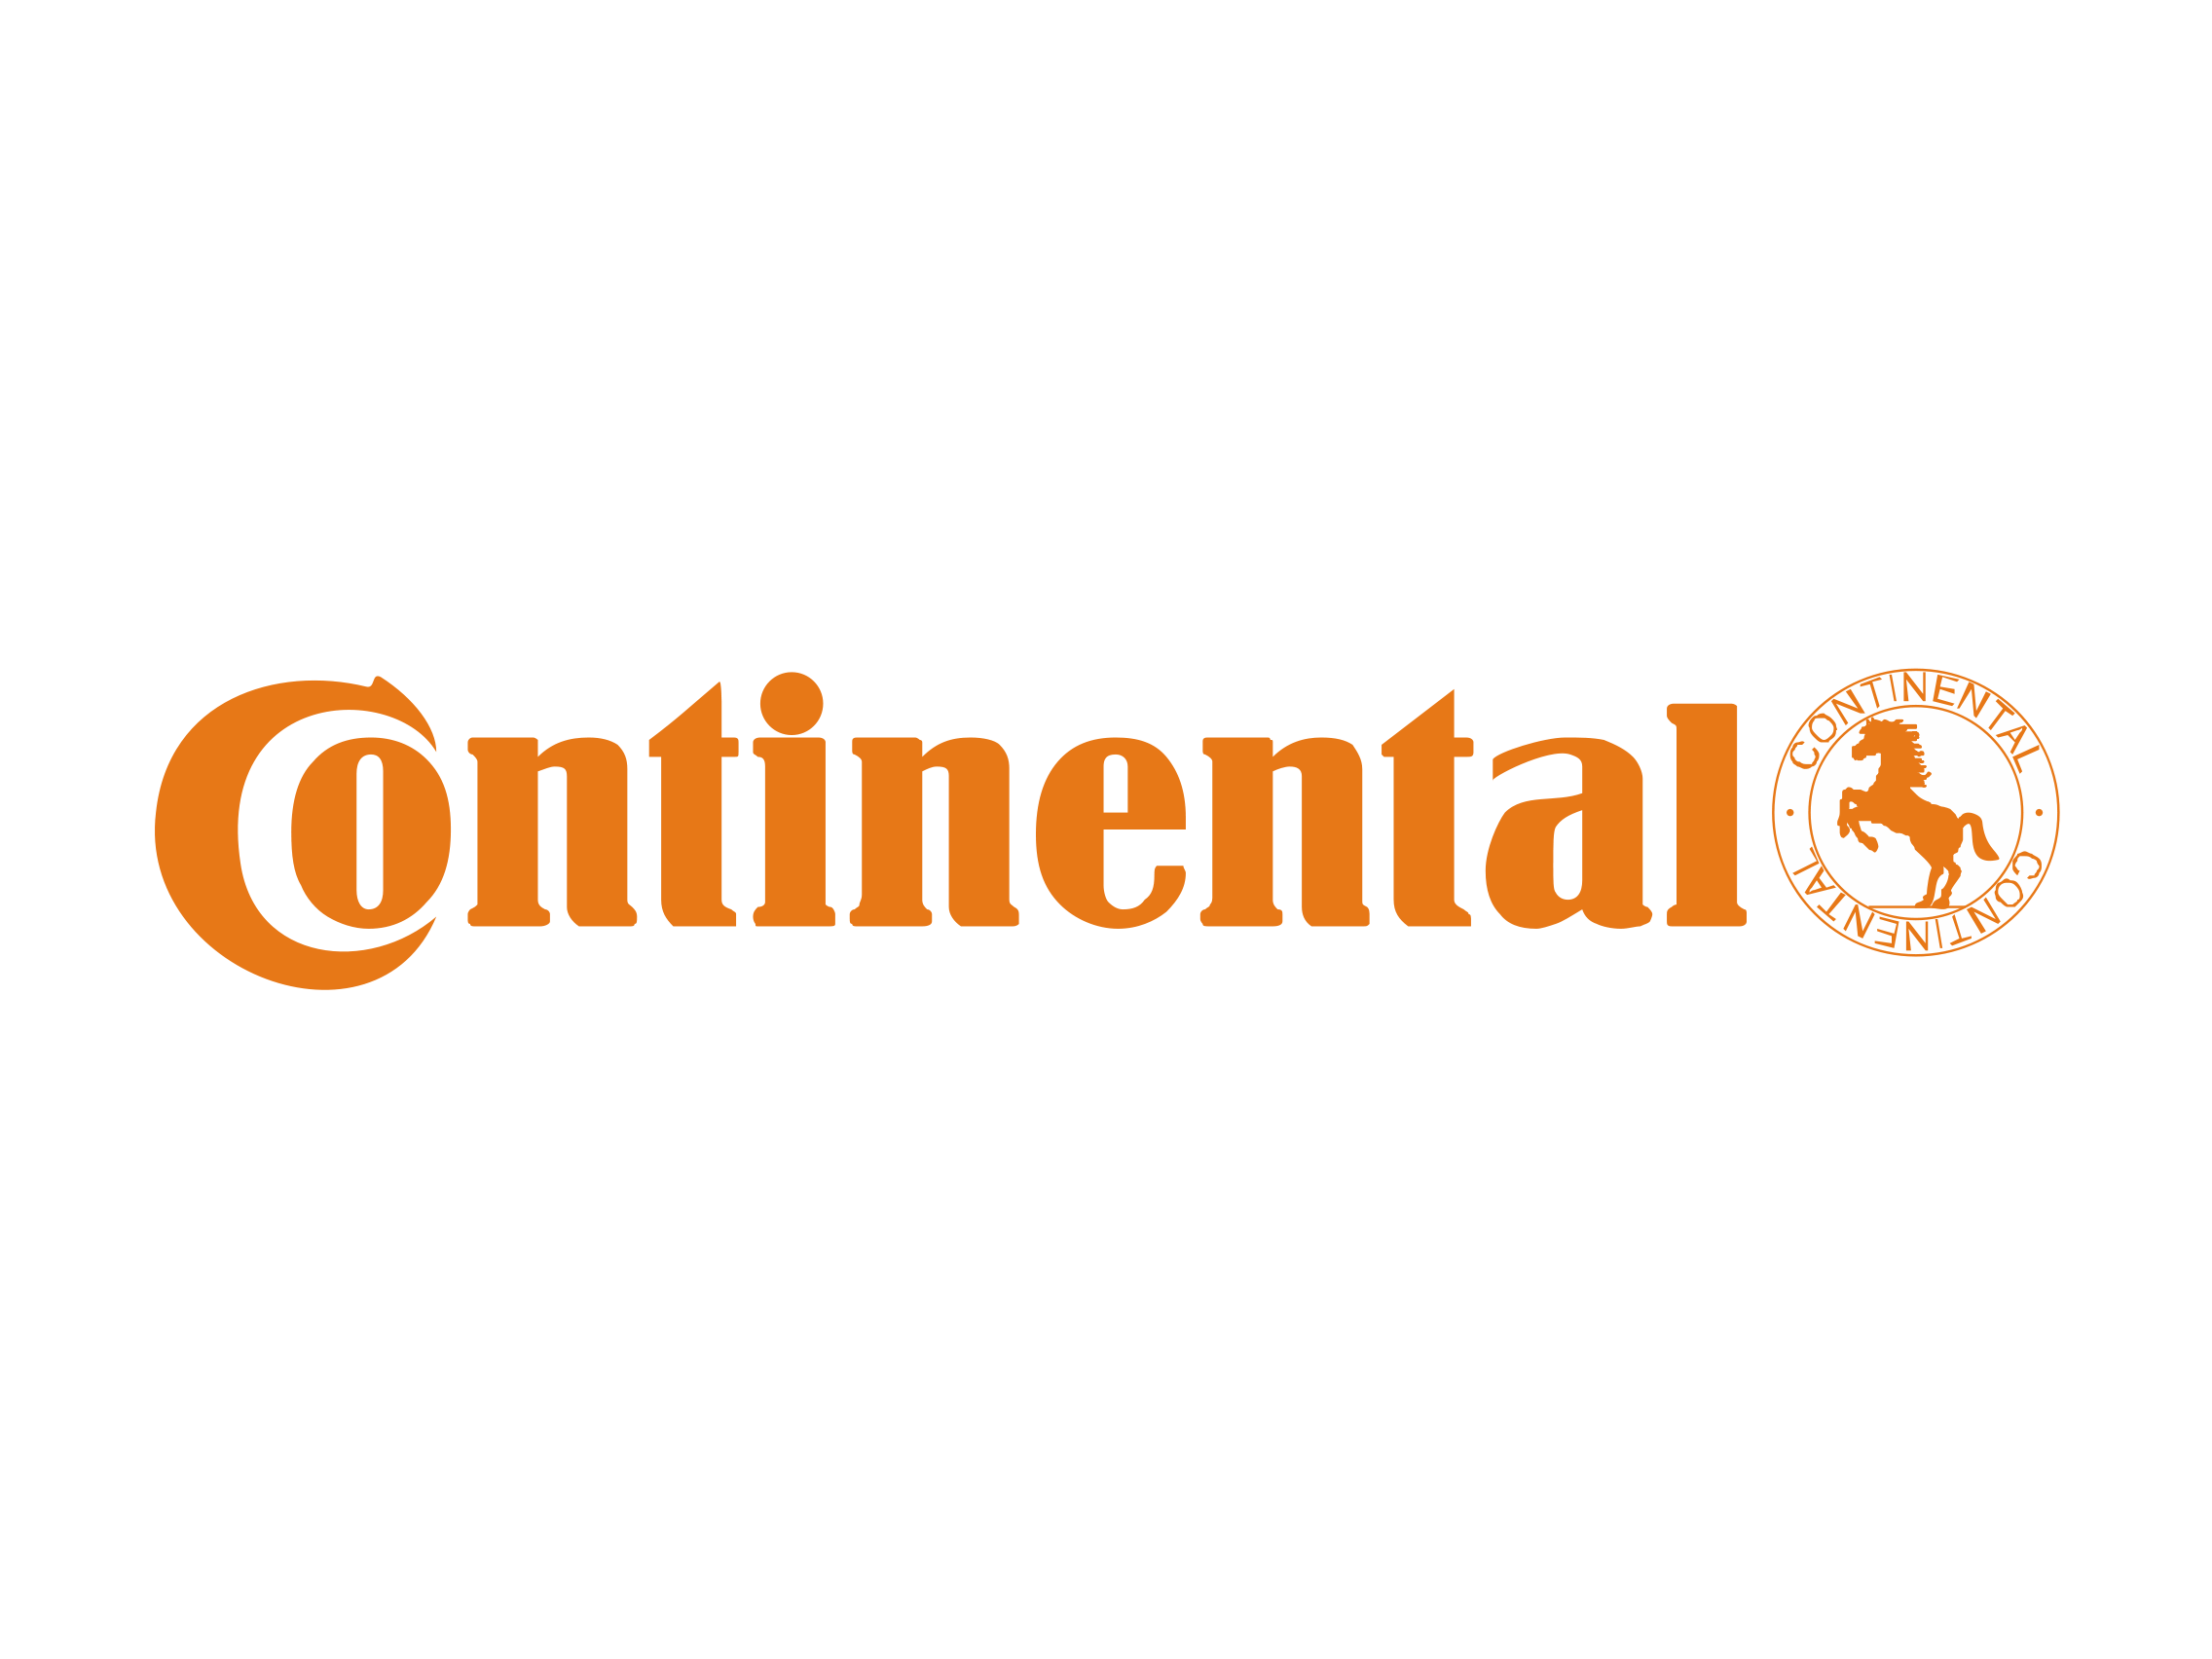 Continental Logo - Continental Tires logo old - Logok